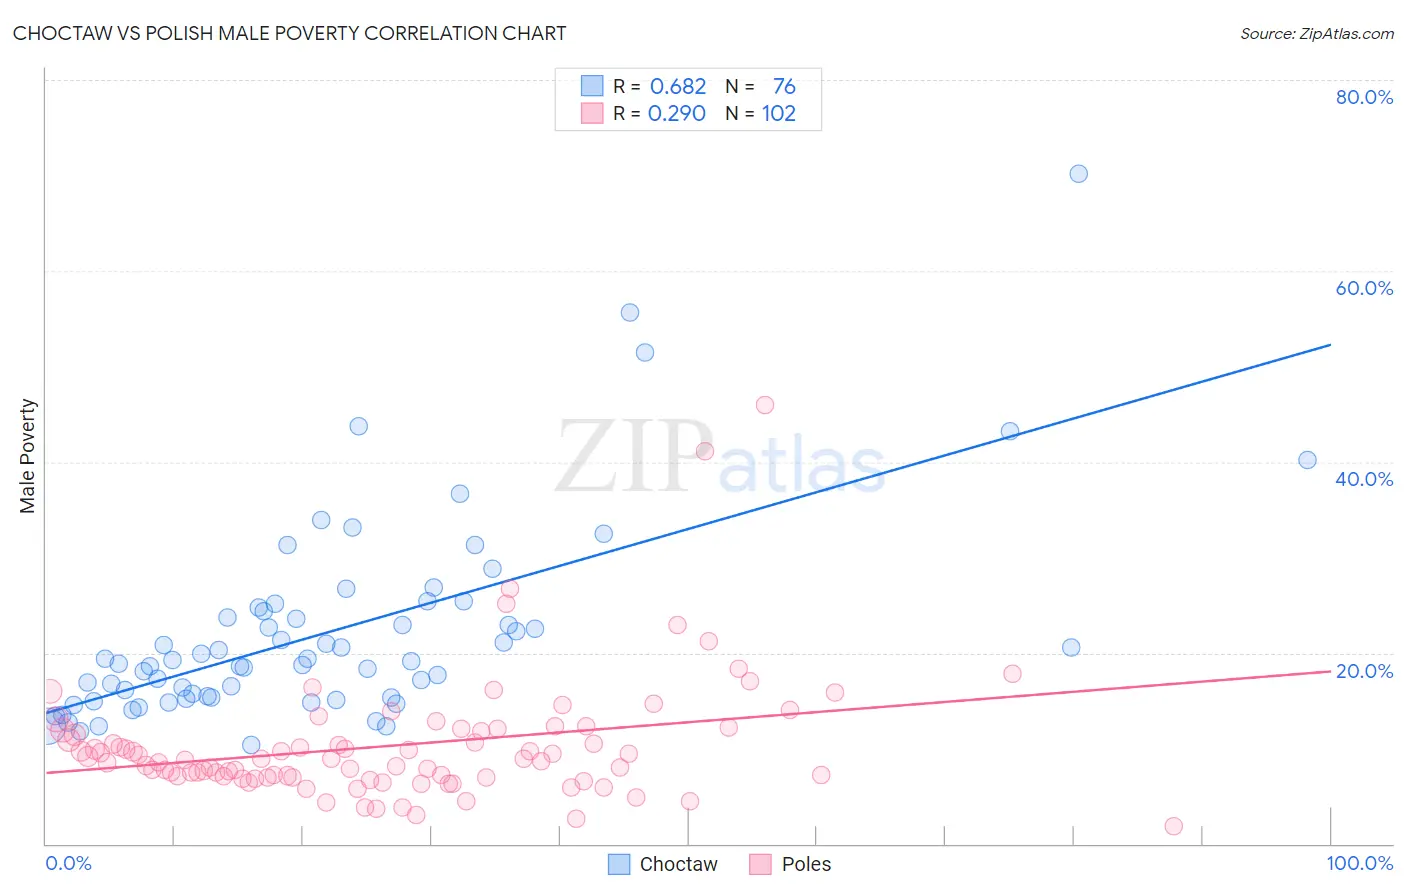 Choctaw vs Polish Male Poverty